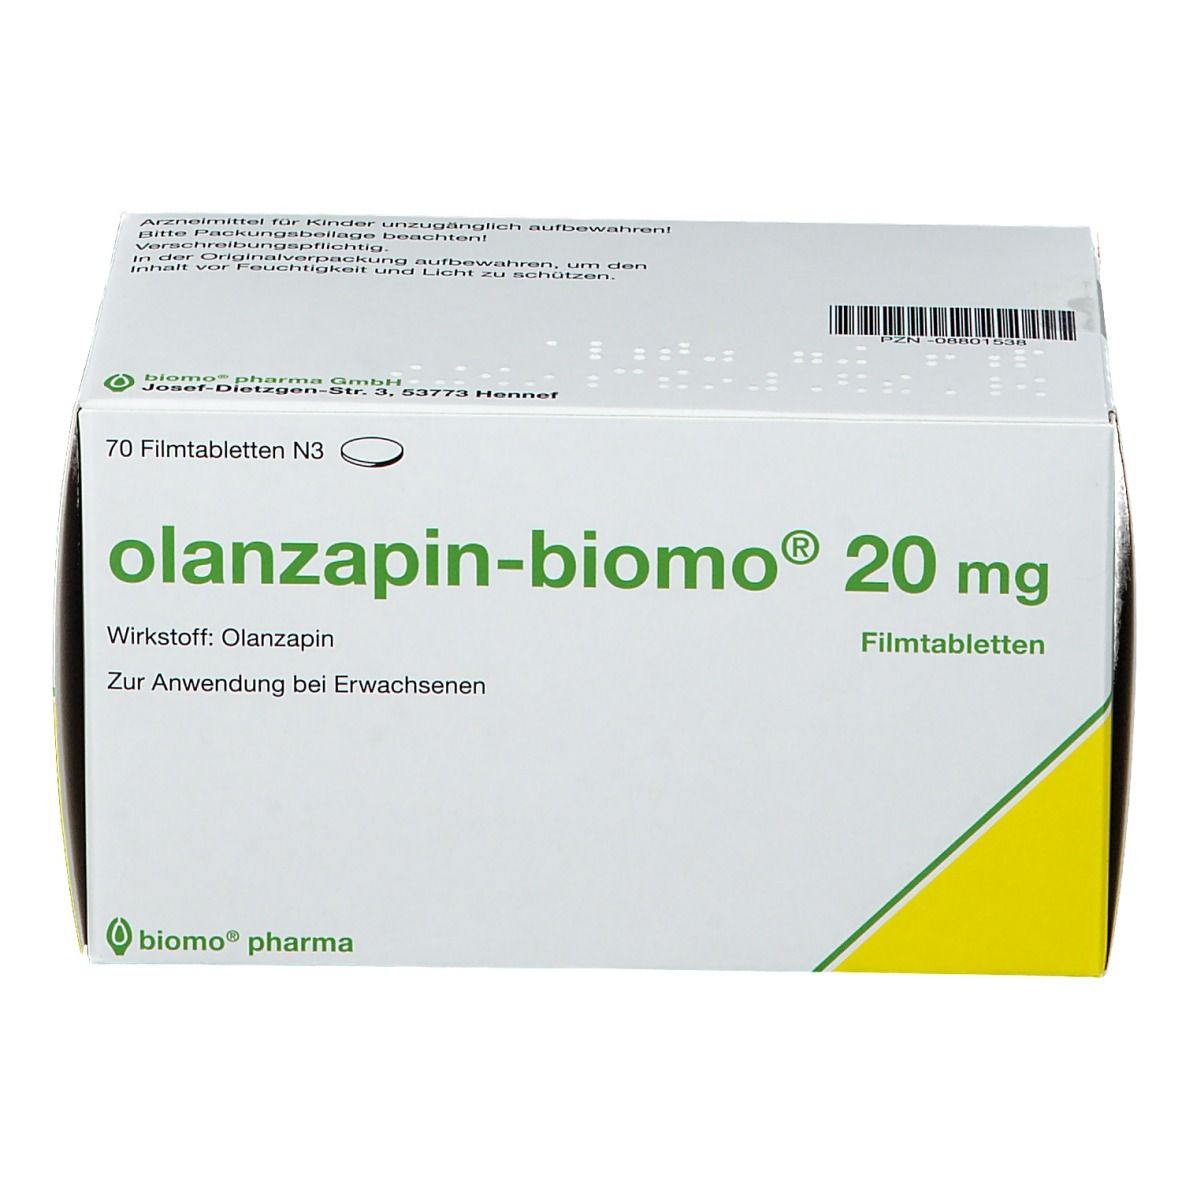 olanzapin-biomo® 20 mg